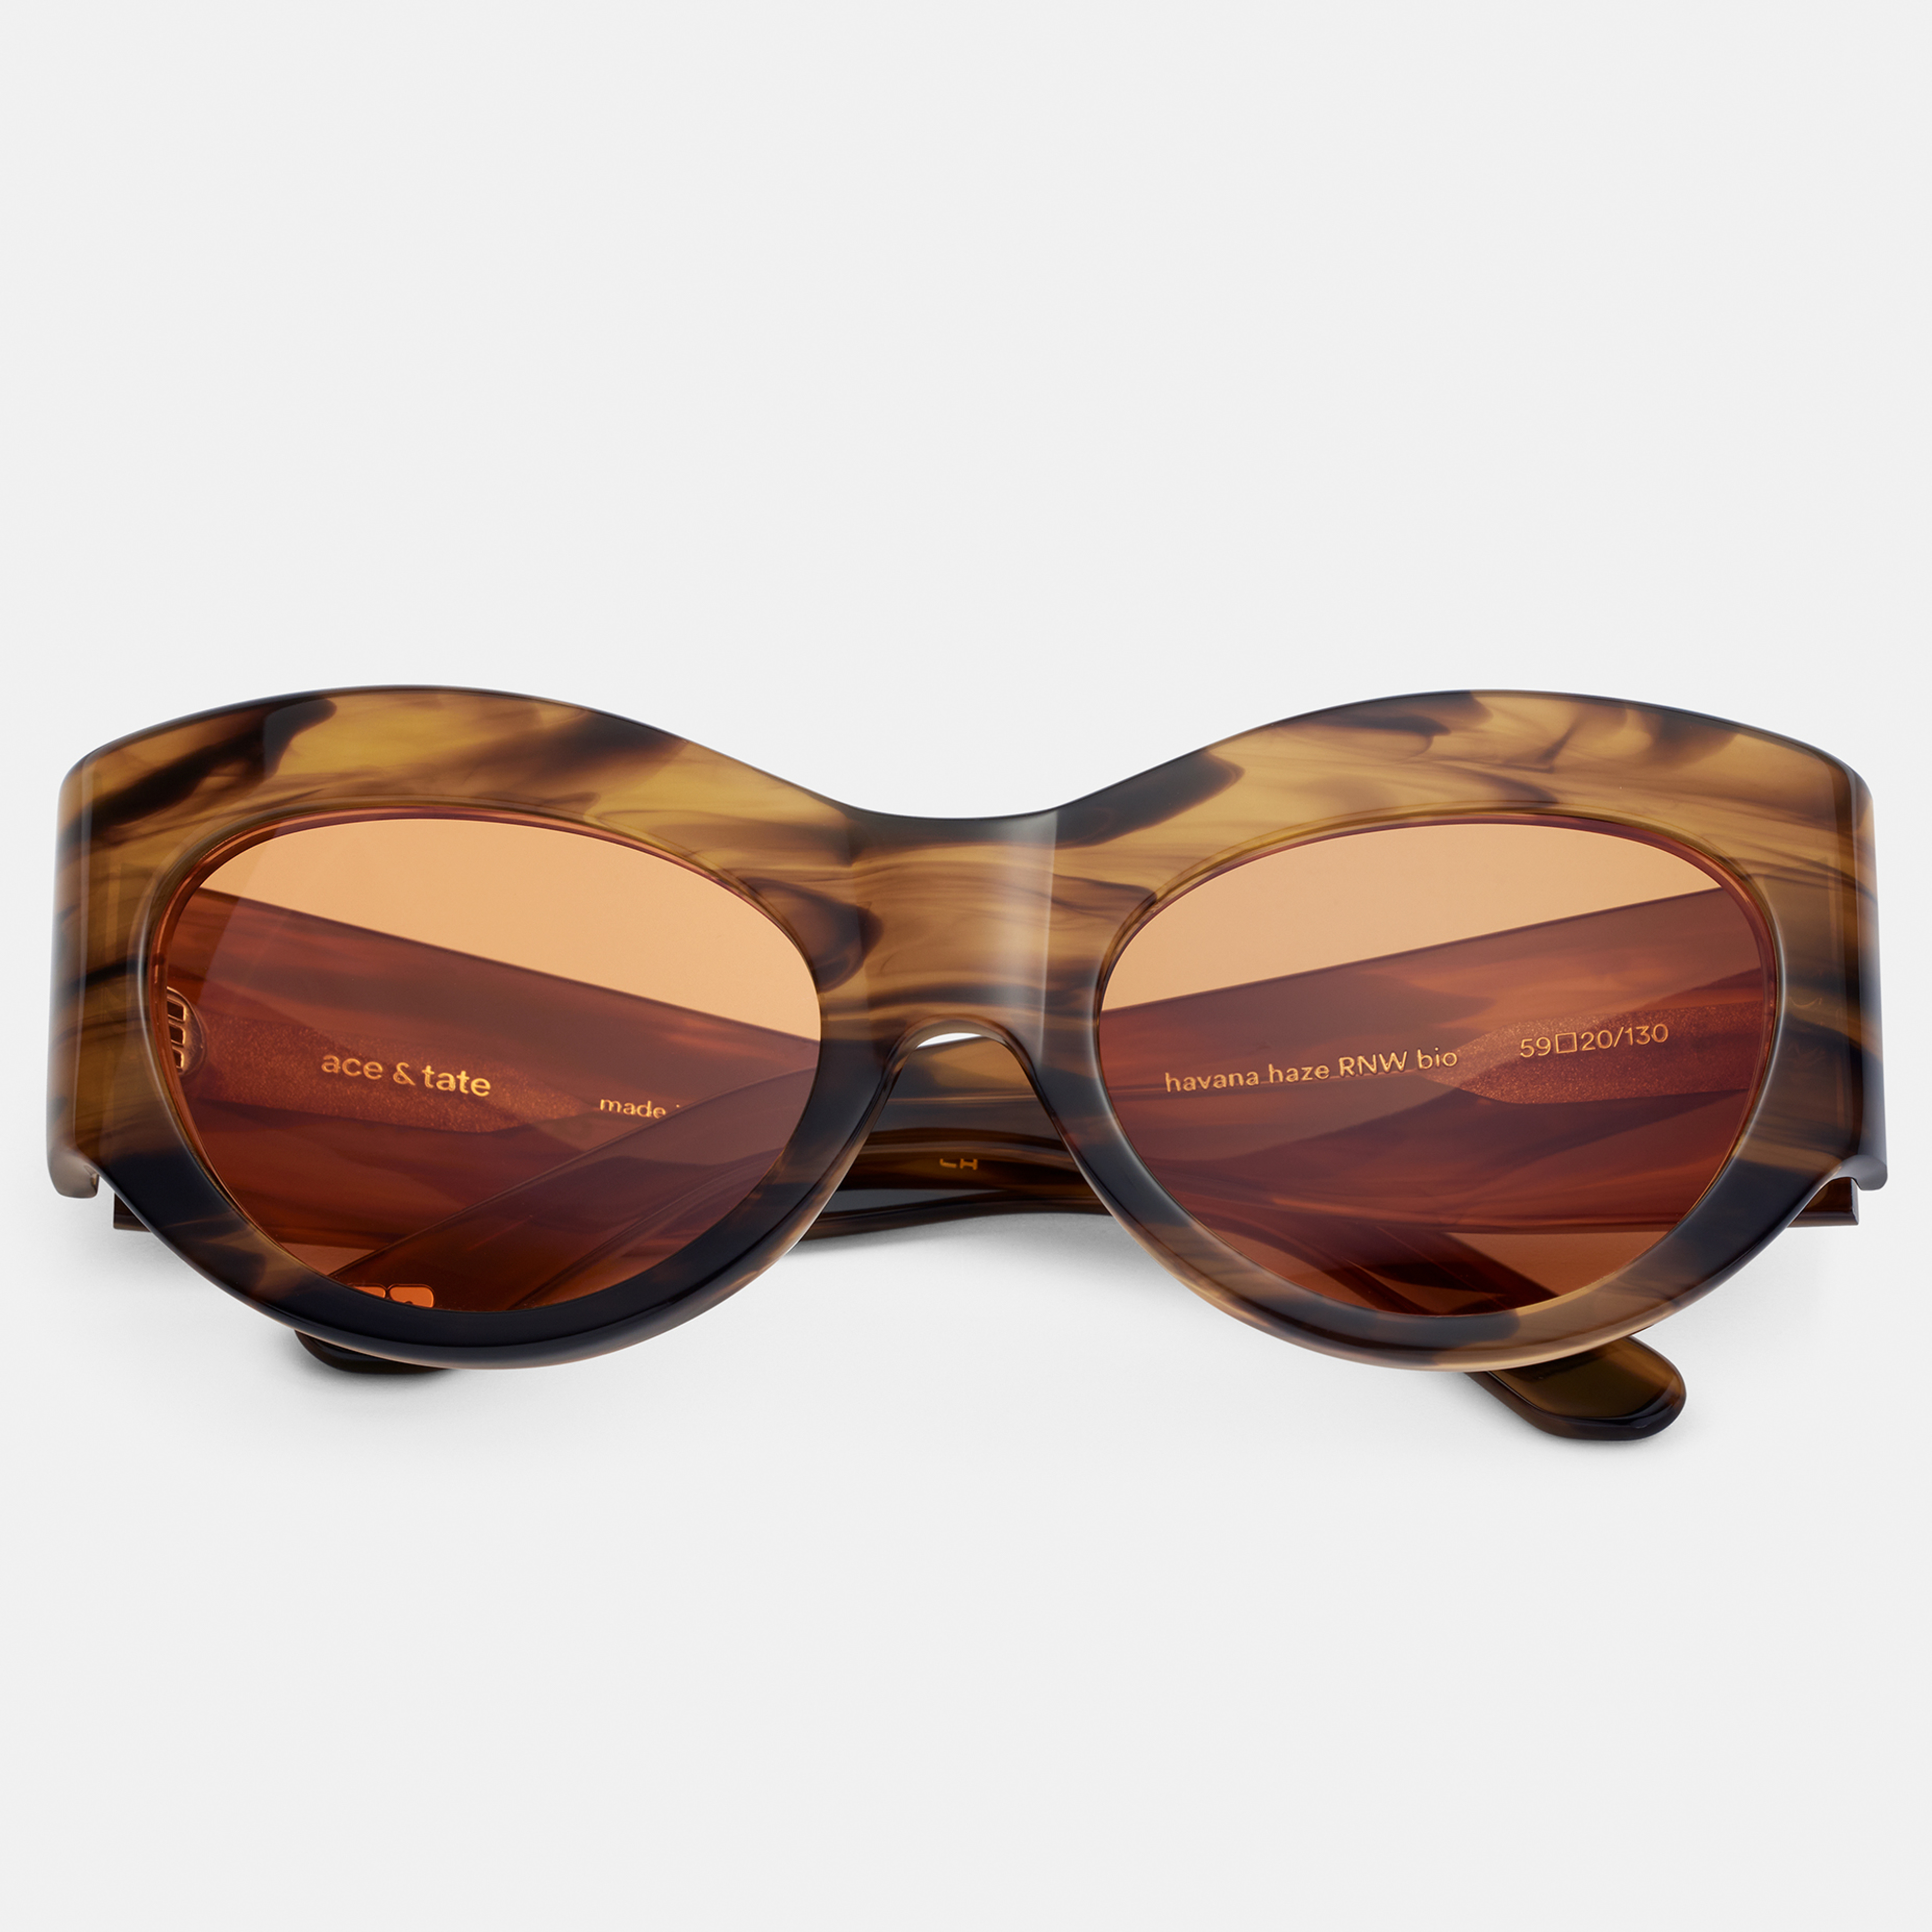 Ace & Tate Sunglasses |  Renew bio acetate in Brown, tortoise